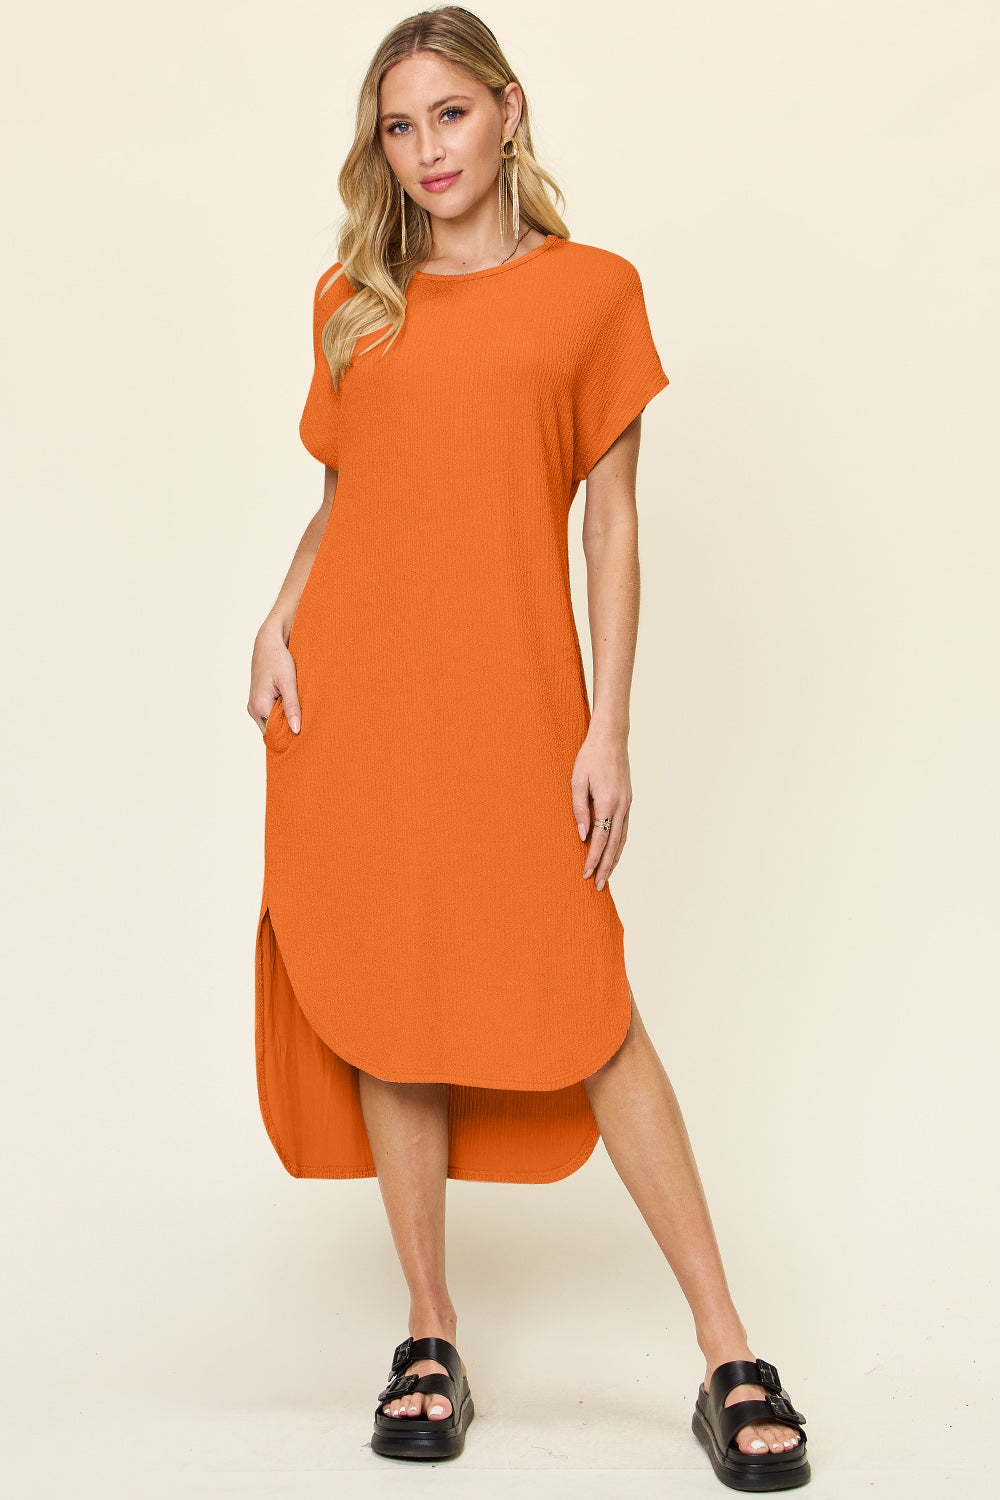 Slightly Slit Round Neck Short Sleeve Dress Tangerine